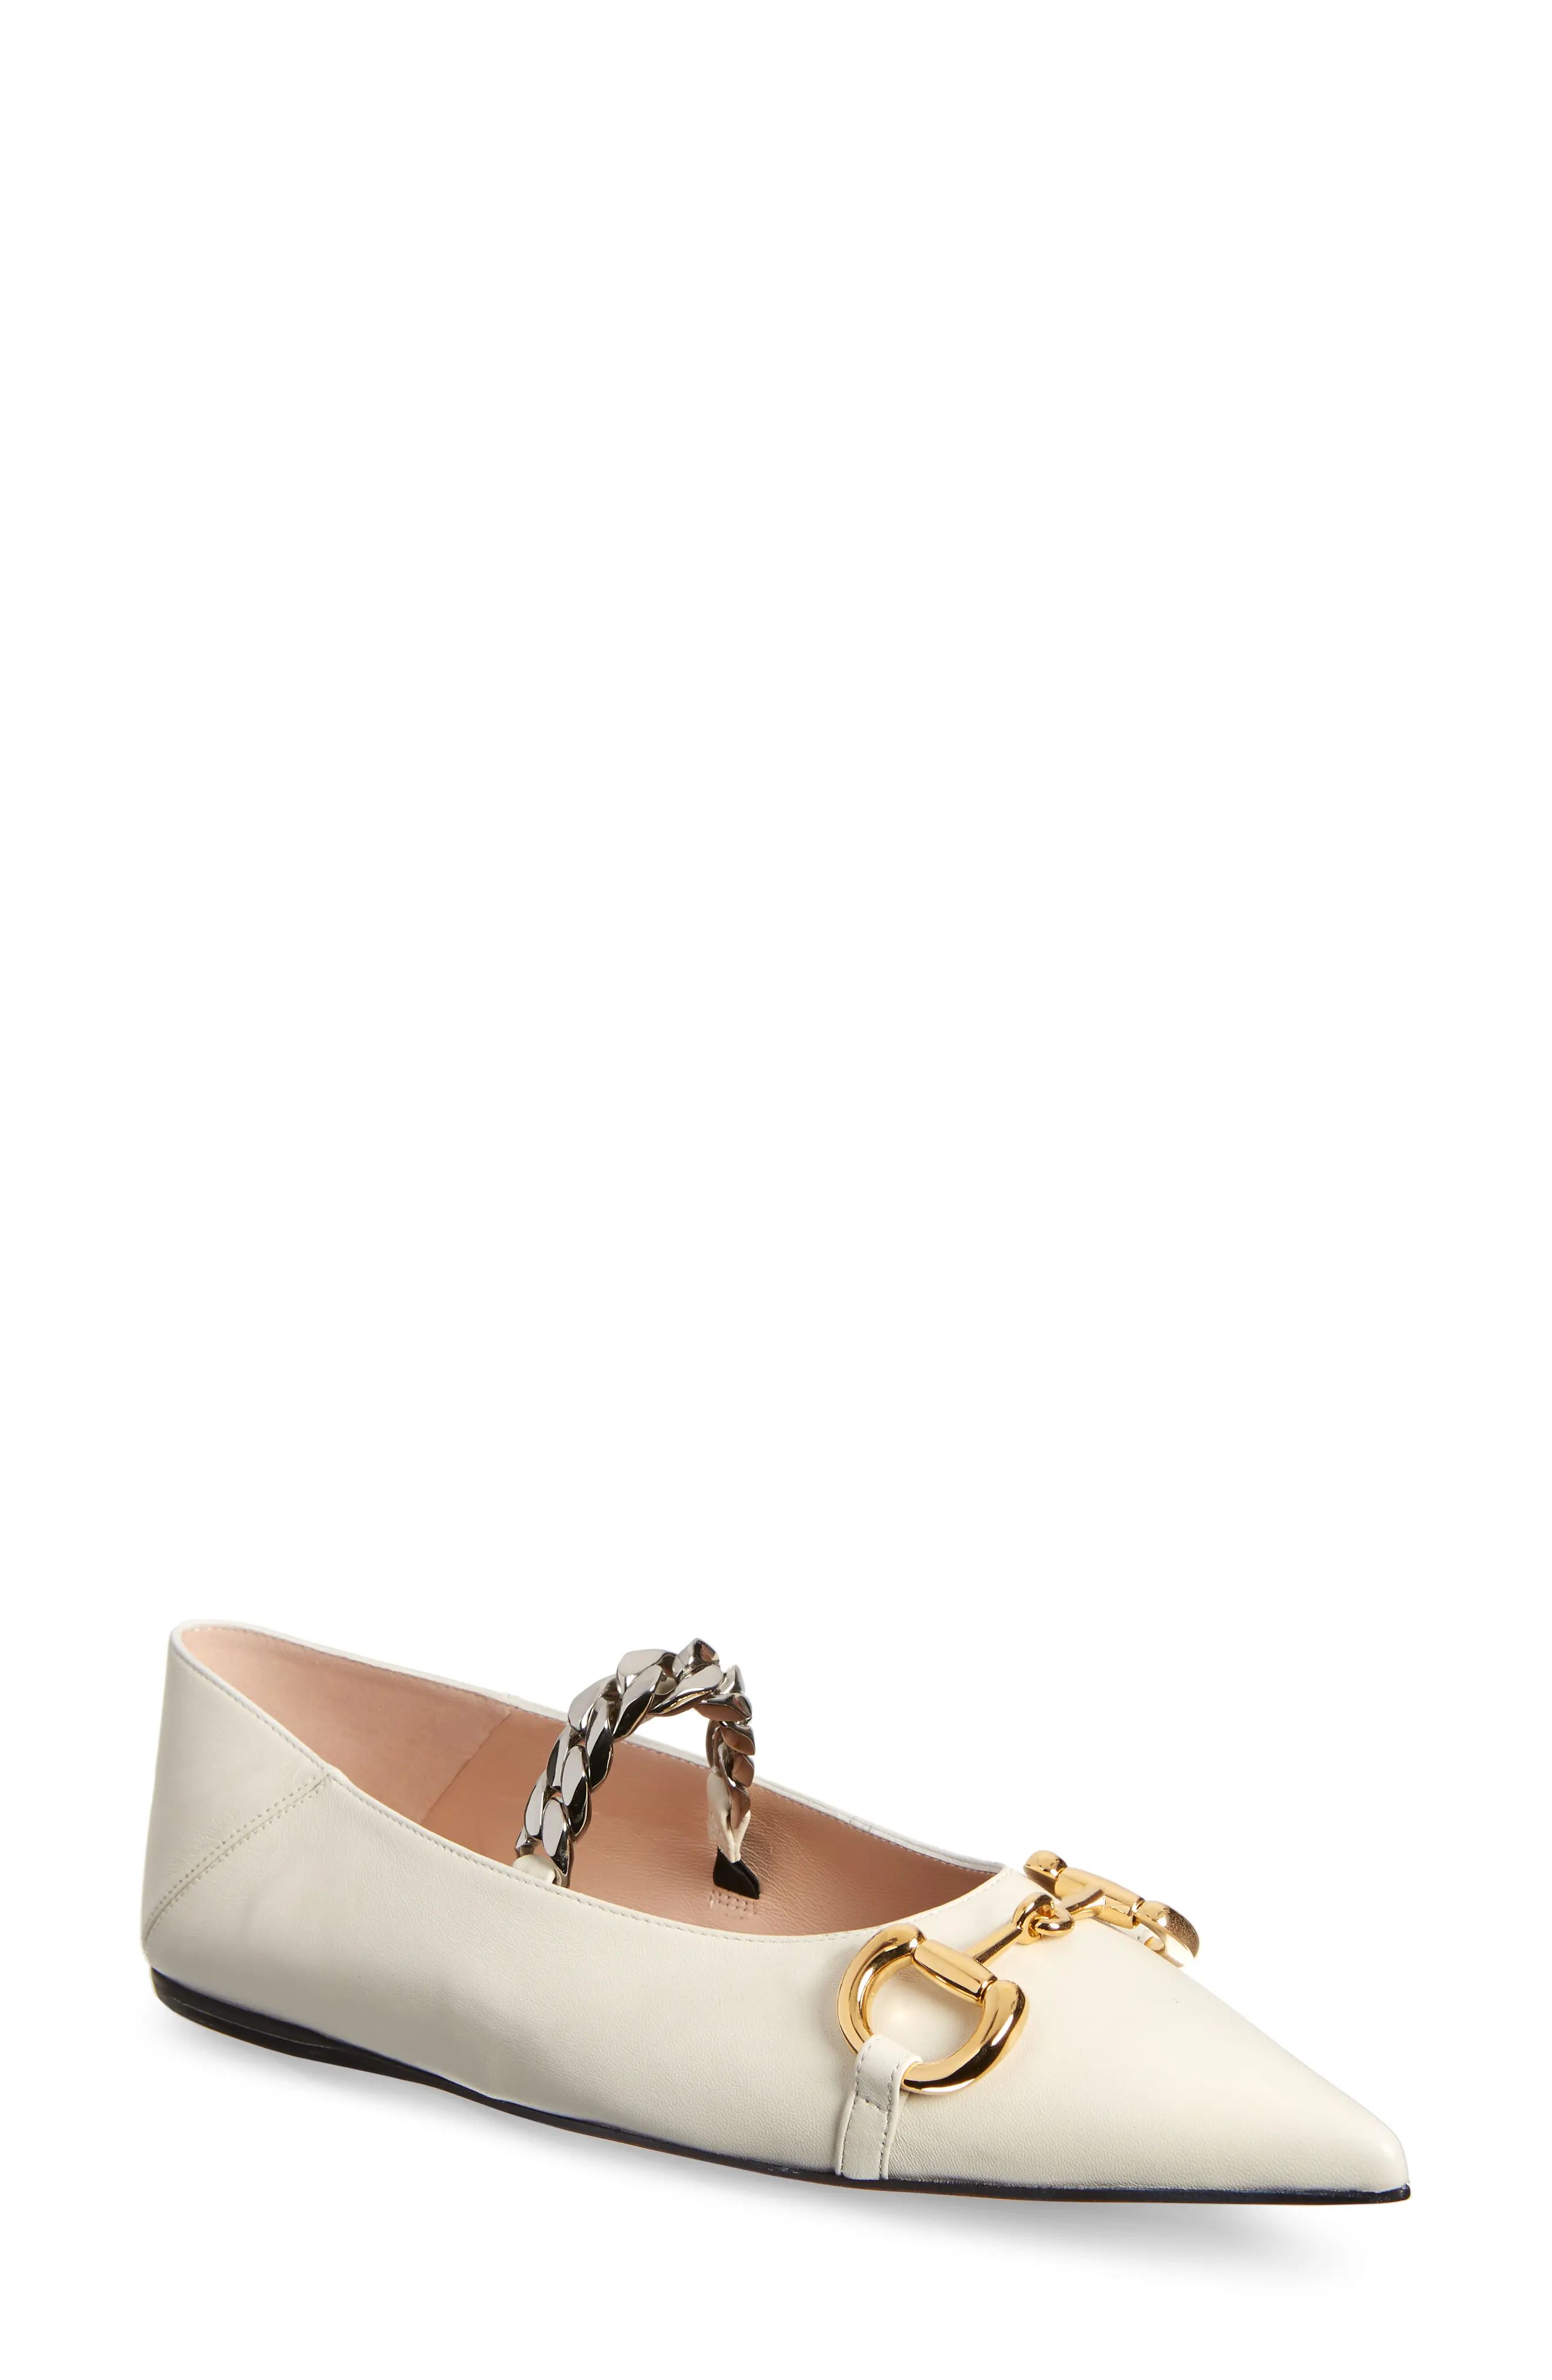 Women's Gucci Deva Horsebit & Chain Convertible Pointed Toe Ballet Flat, Size 9.5US - White | Nordstrom